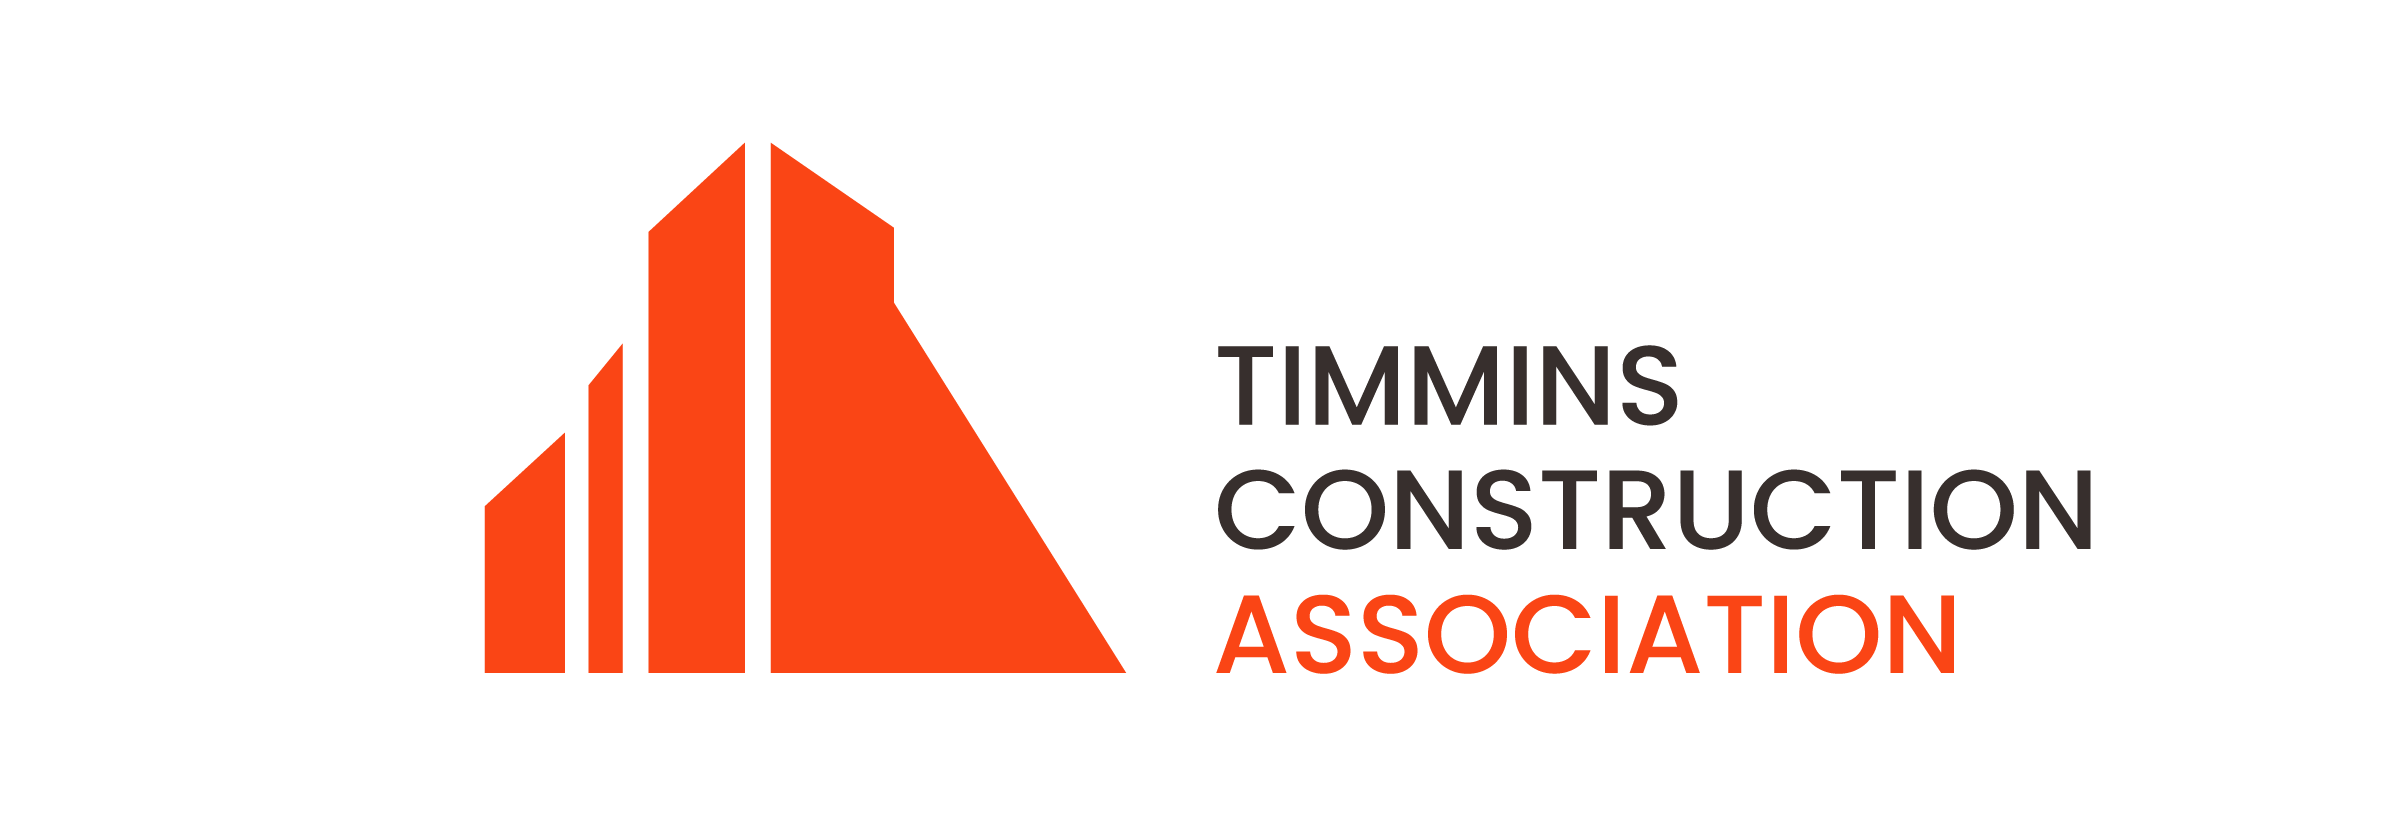 Timmins Construction Association